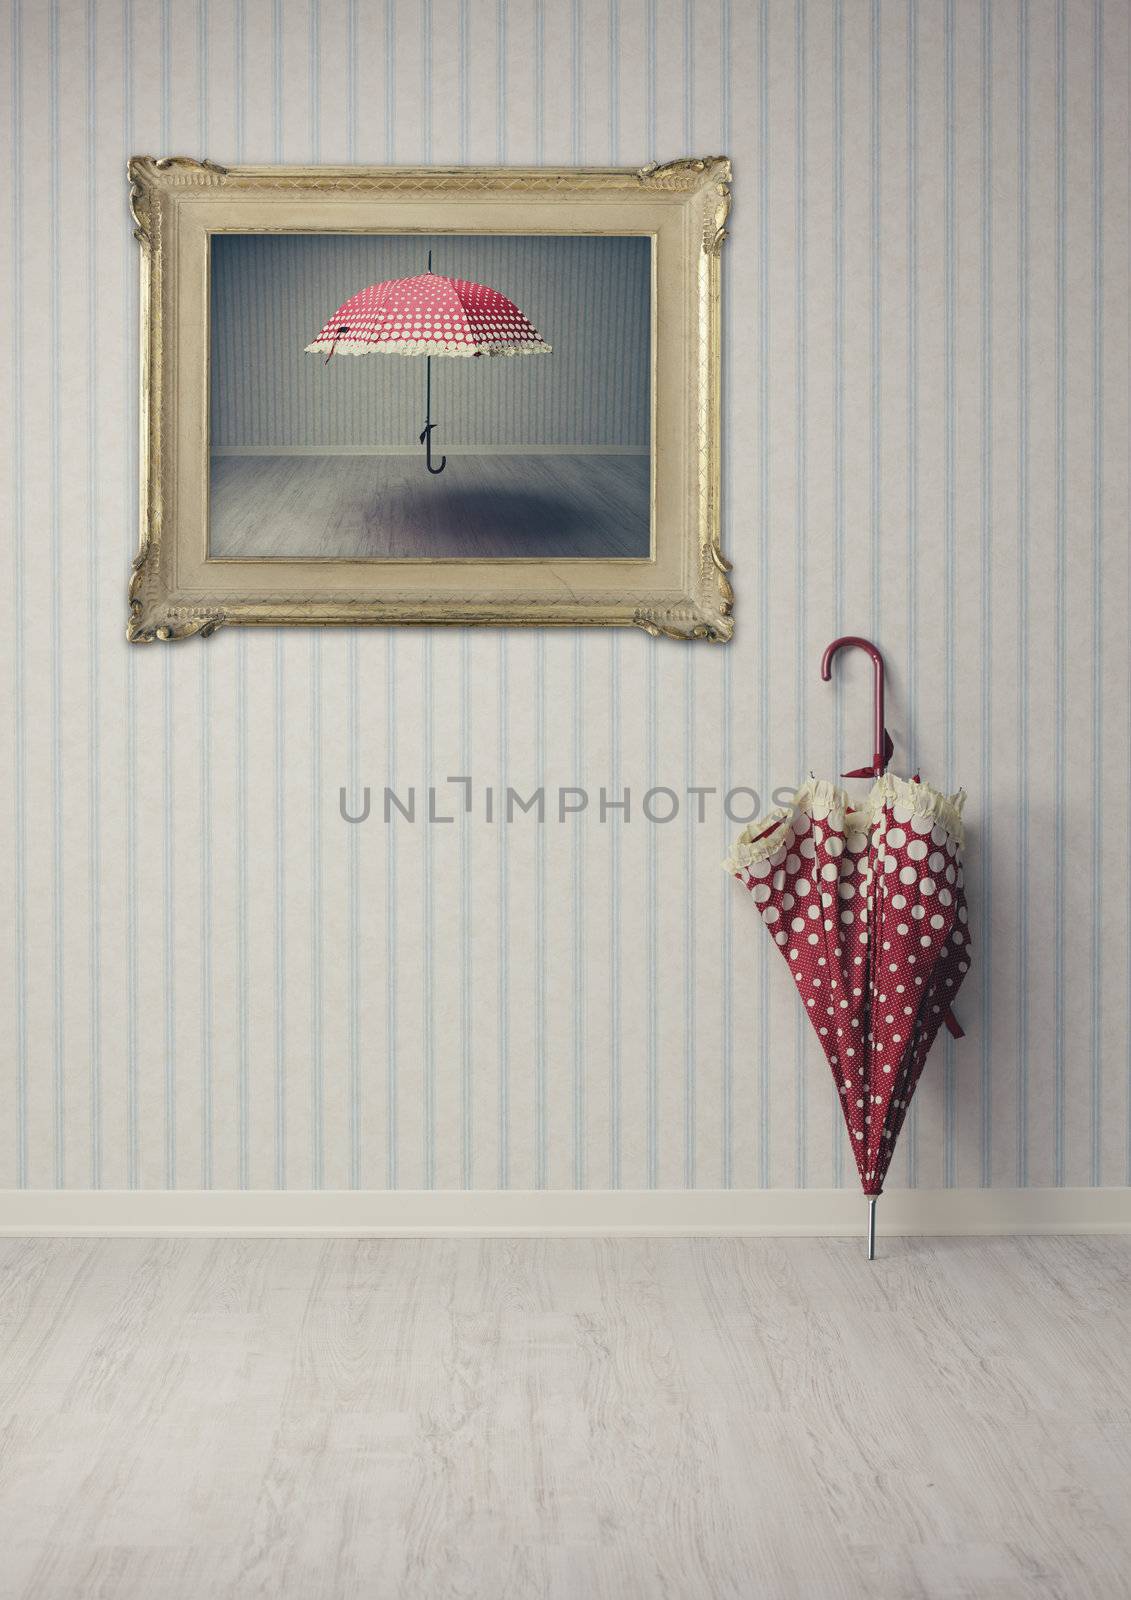 vintage umbrella in an empty room or art gallery